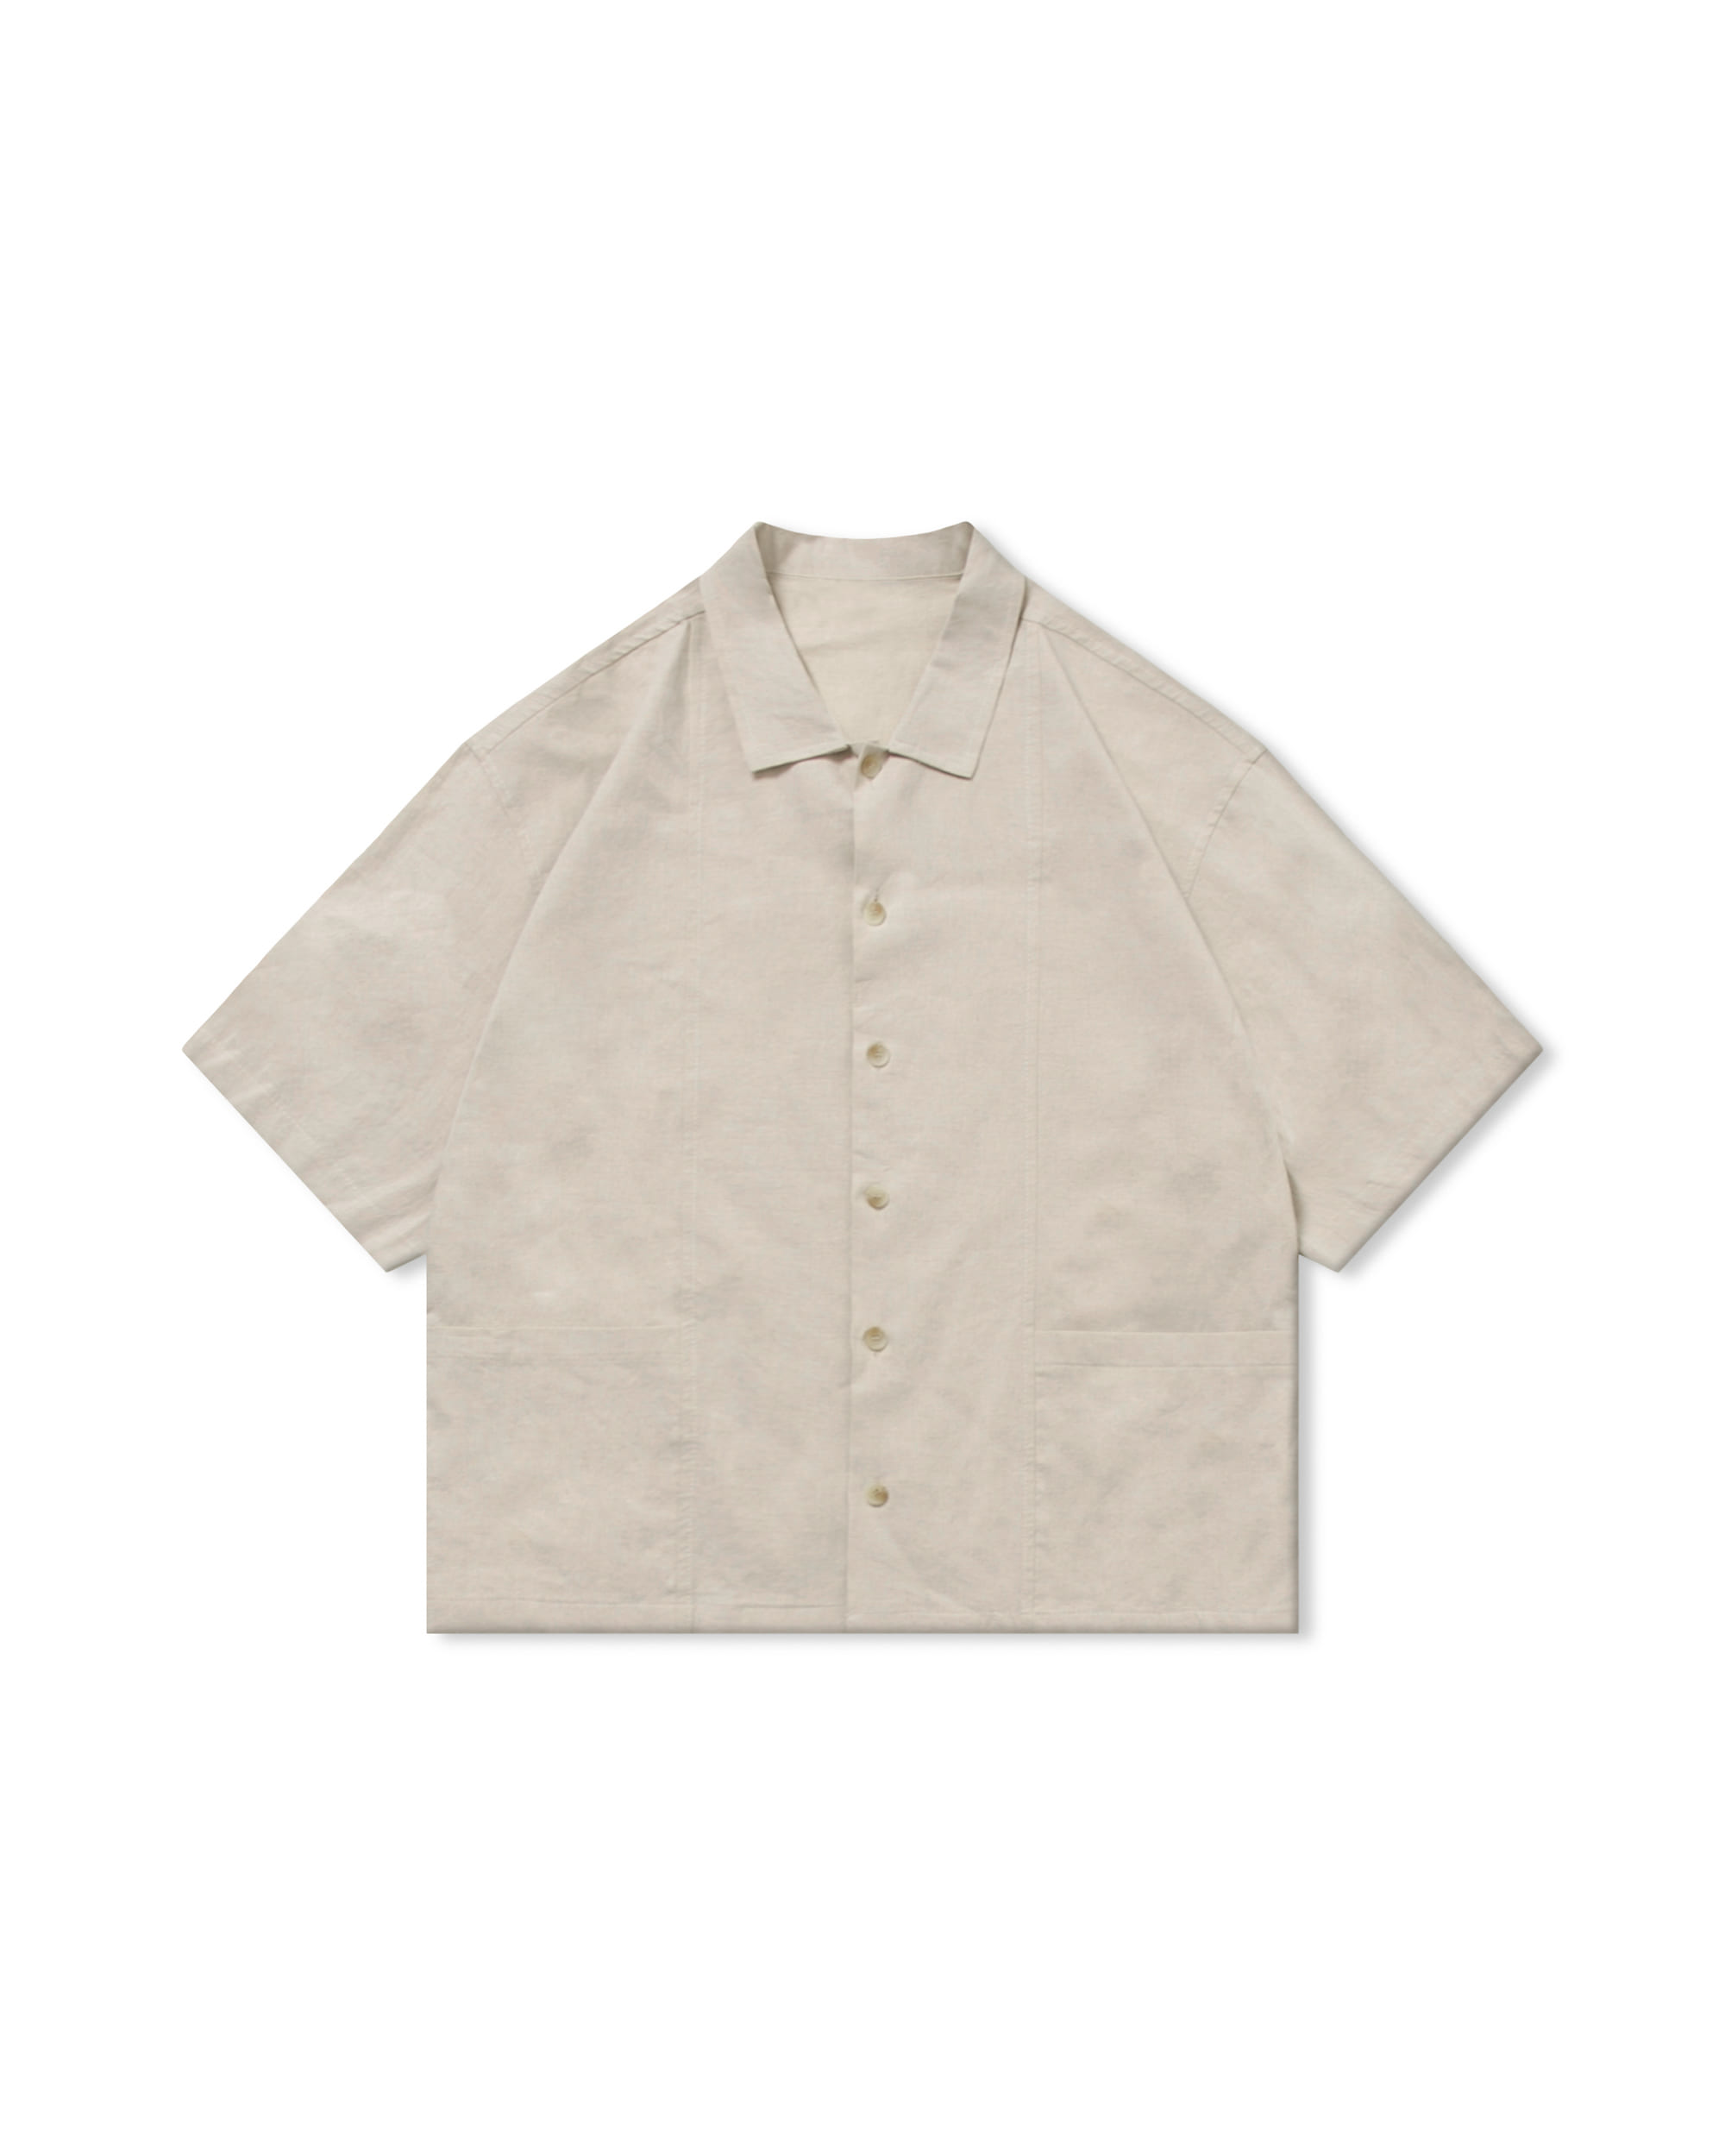 Linen Standard Two Pocket Half Shirts - Beige